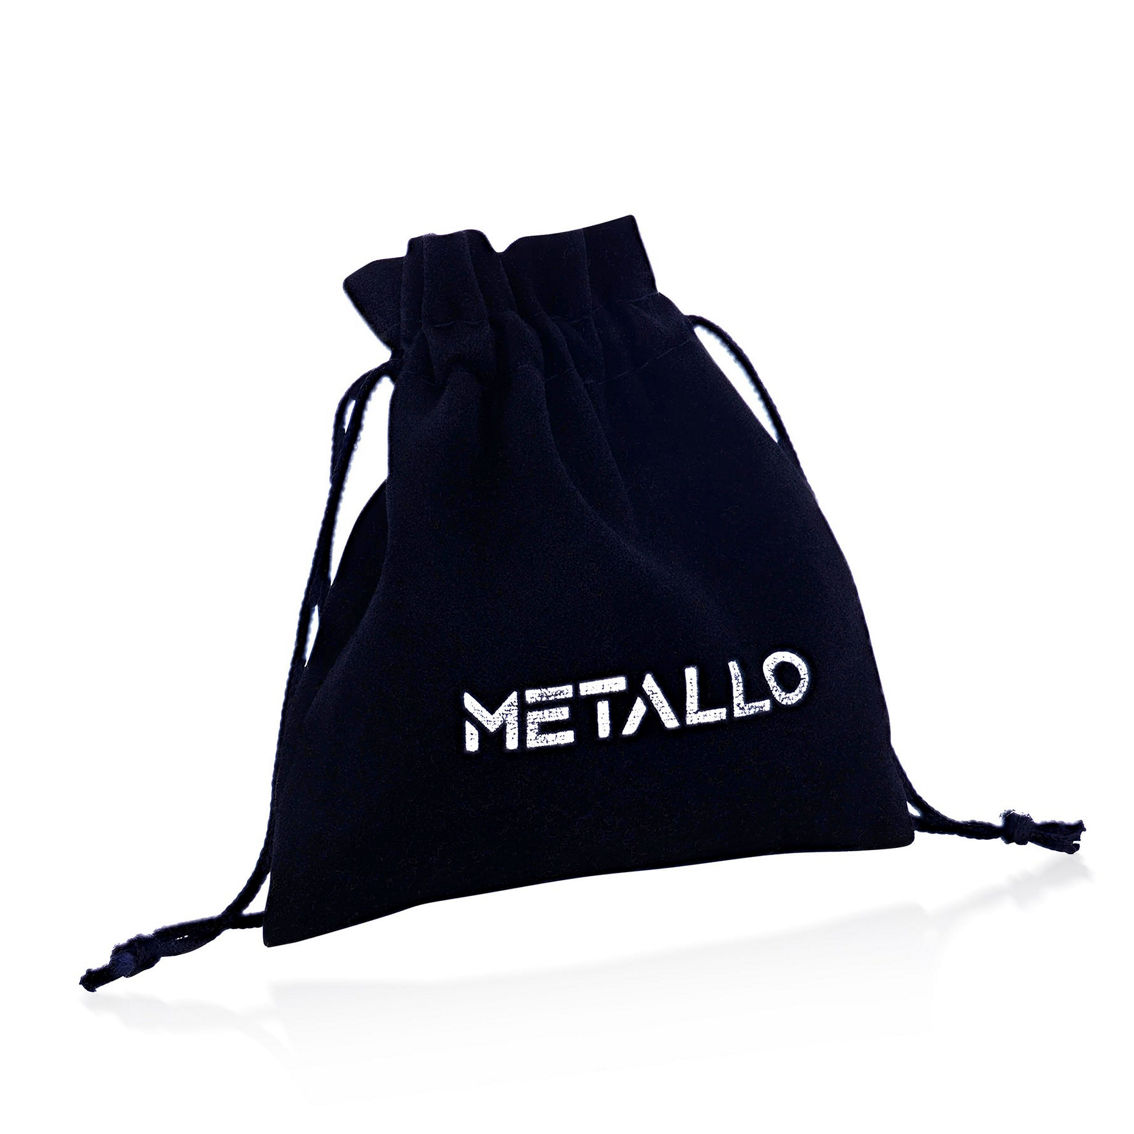 Metallo Stainless Steel Cross Style Earrings - Image 2 of 2